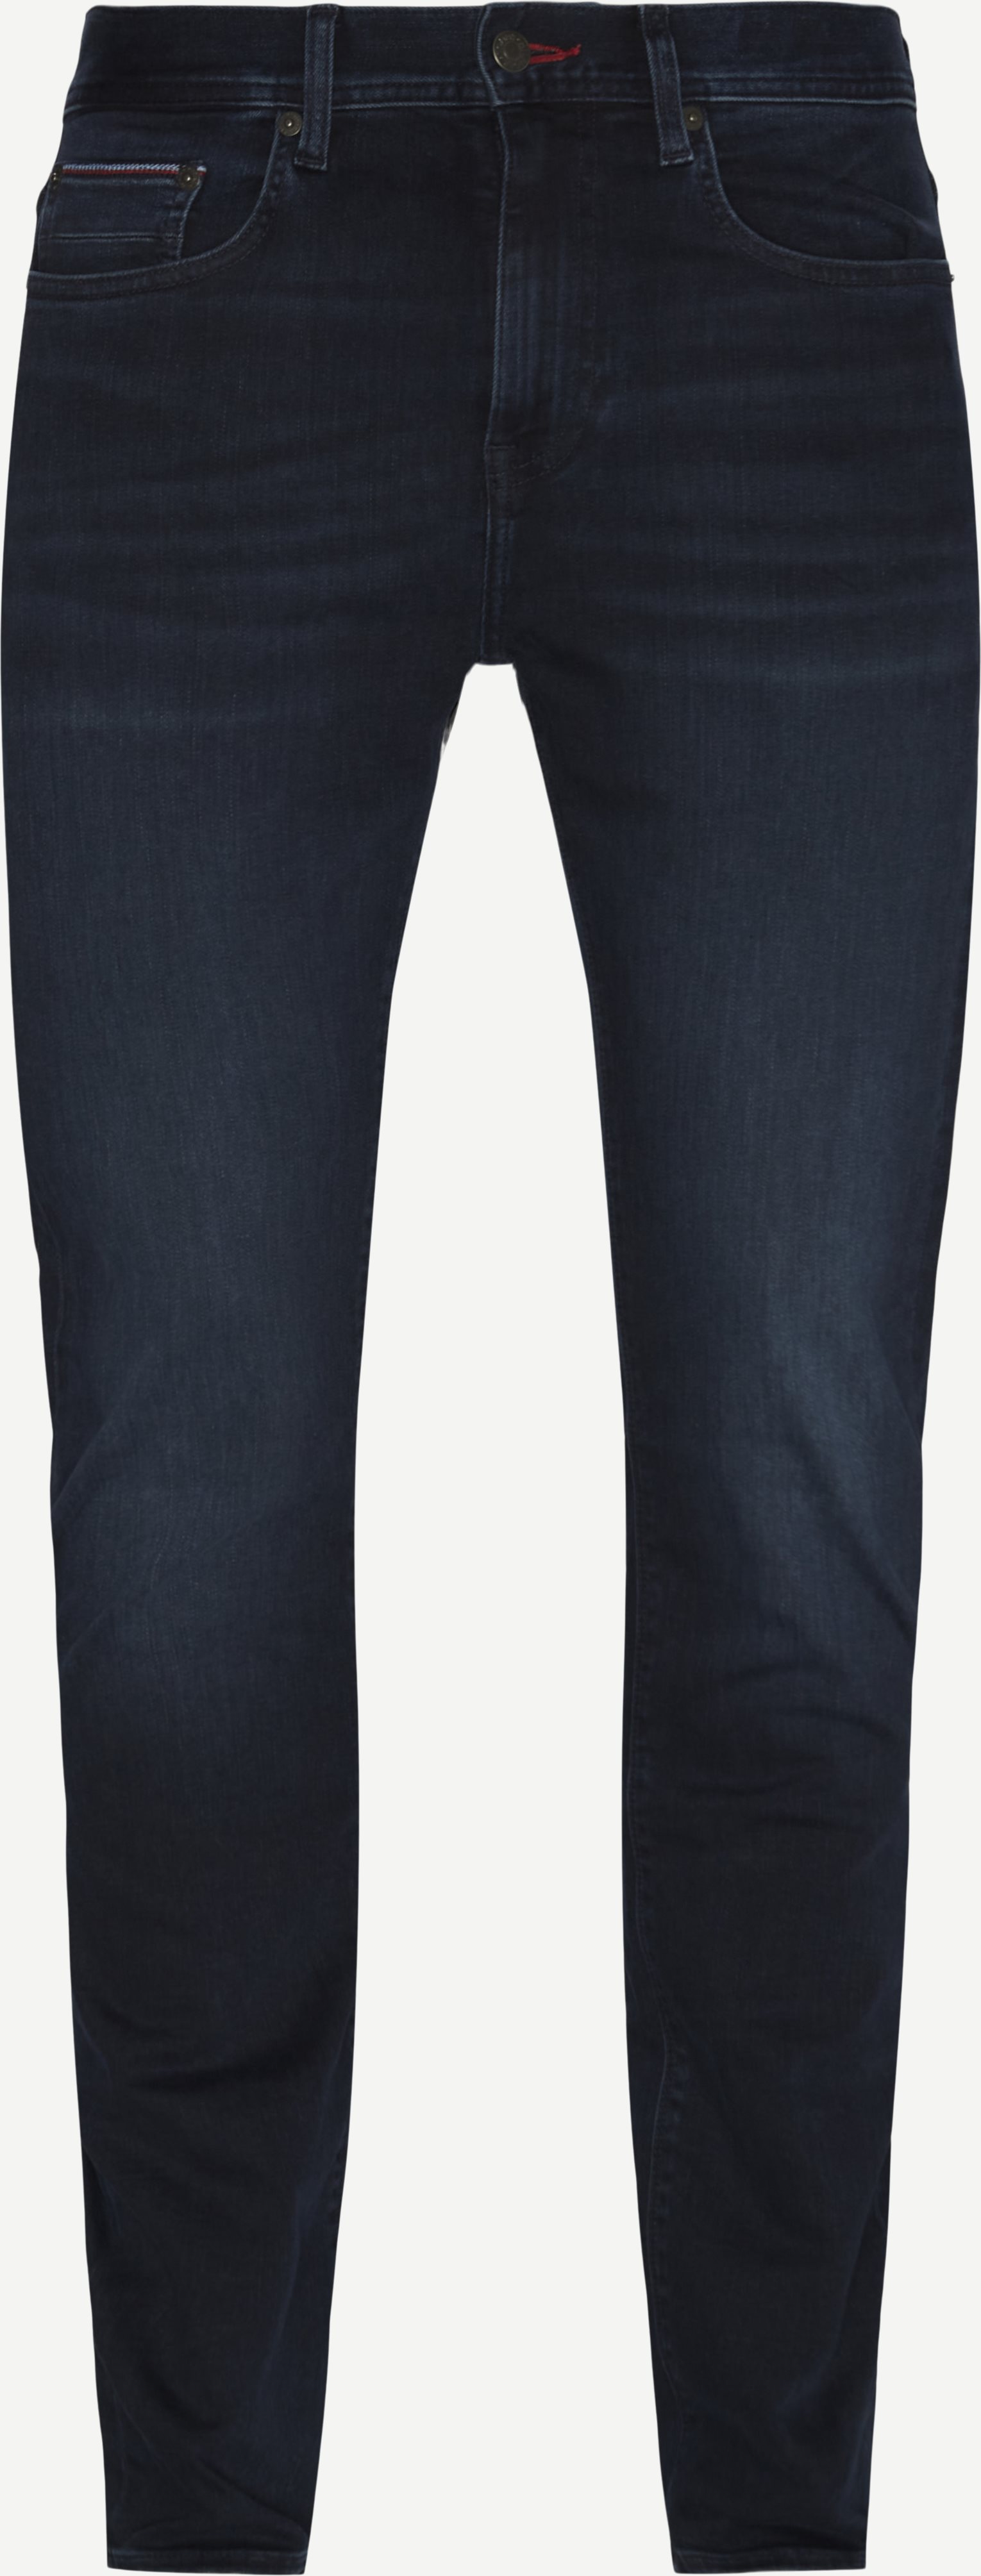 15593 Bleecker Iowa Jeans - Jeans - Slim fit - Denim